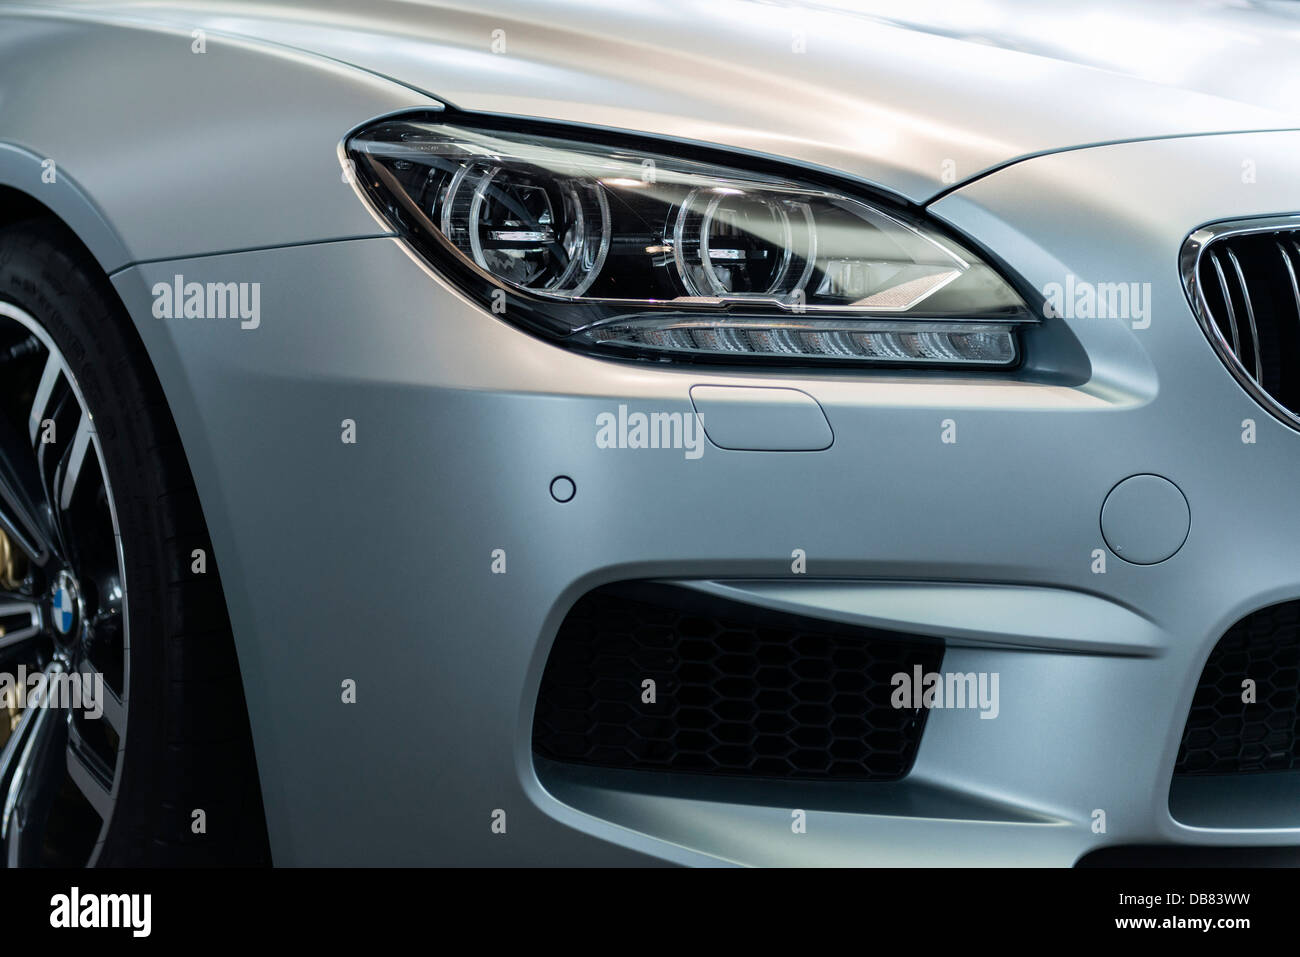 New BMW Car - 3 series detail Stock Photo